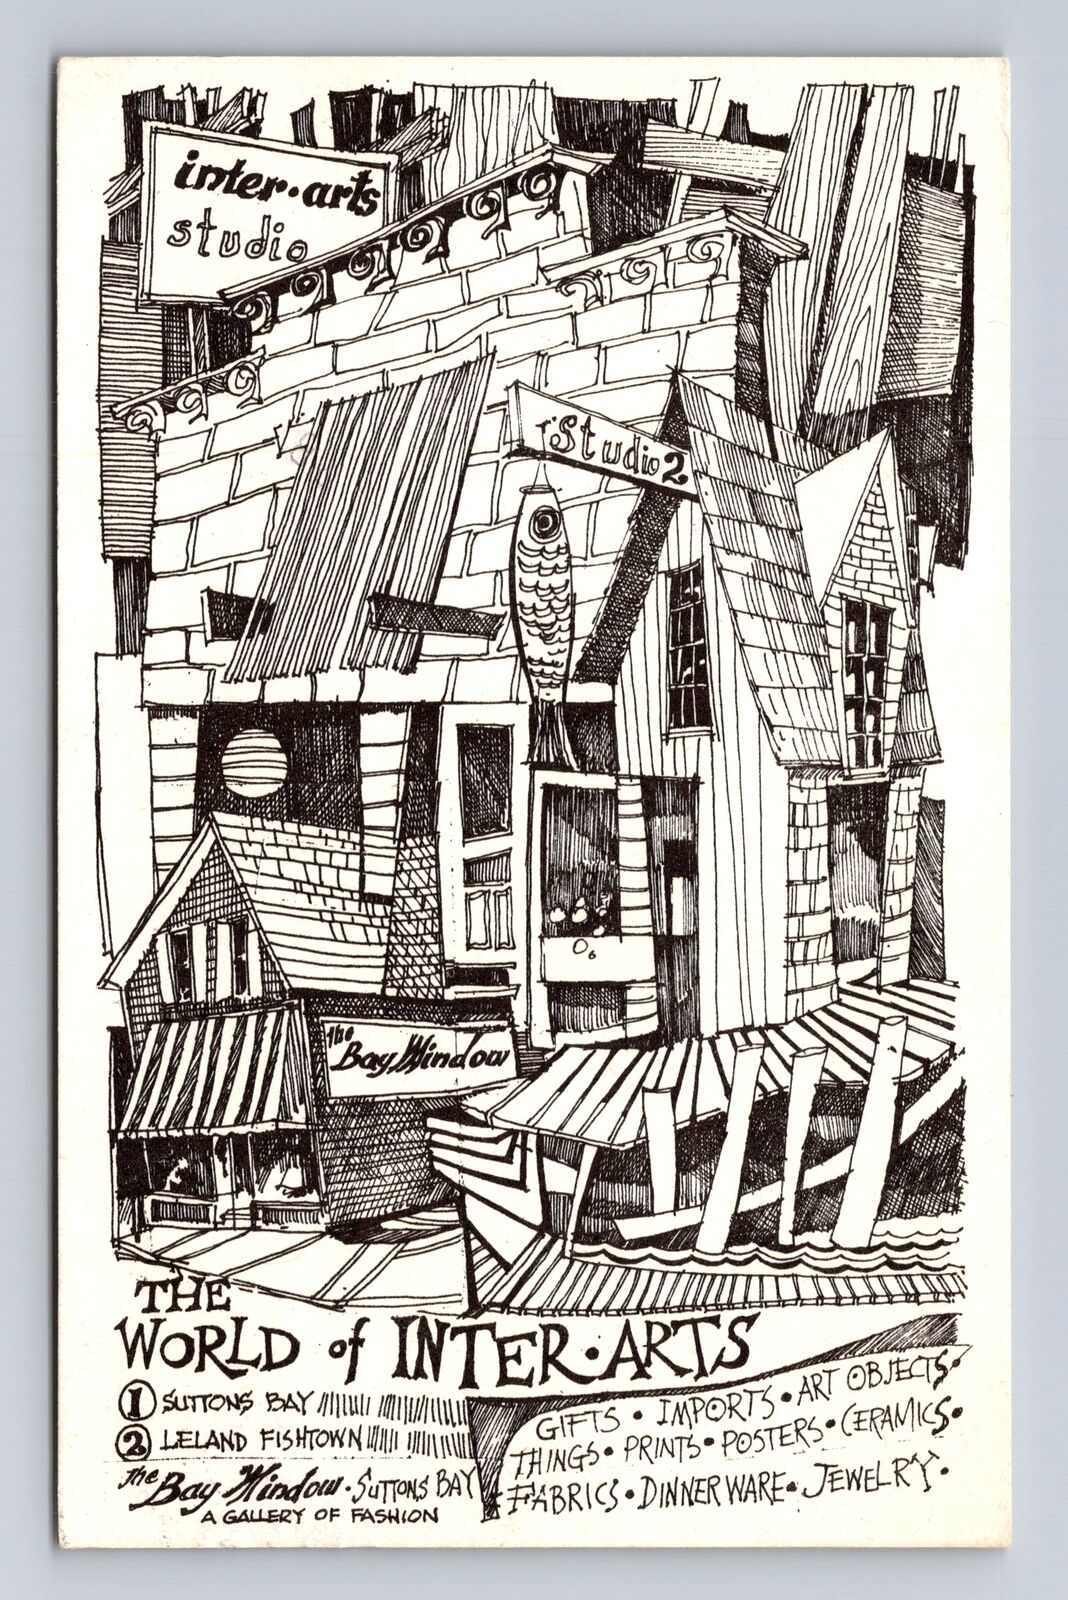 Suttons Bay MI-Michigan, Inter-Arts Studio, Advertising, Vintage c1981 Postcard